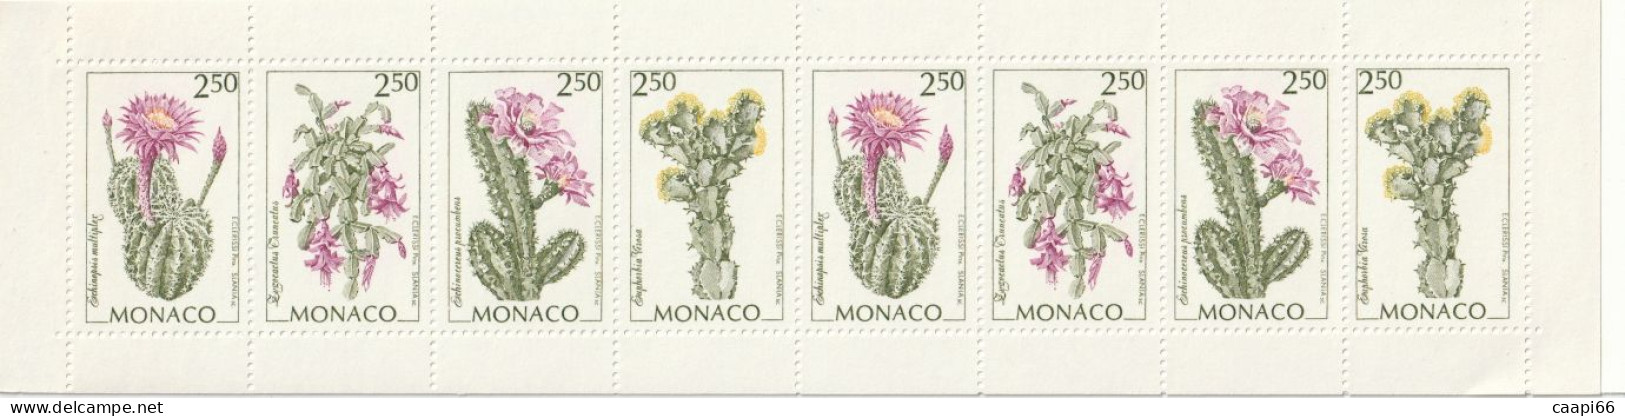 Monaco -1993 Carnet N°9 "JARDIN EXOTIQUE" - Booklets